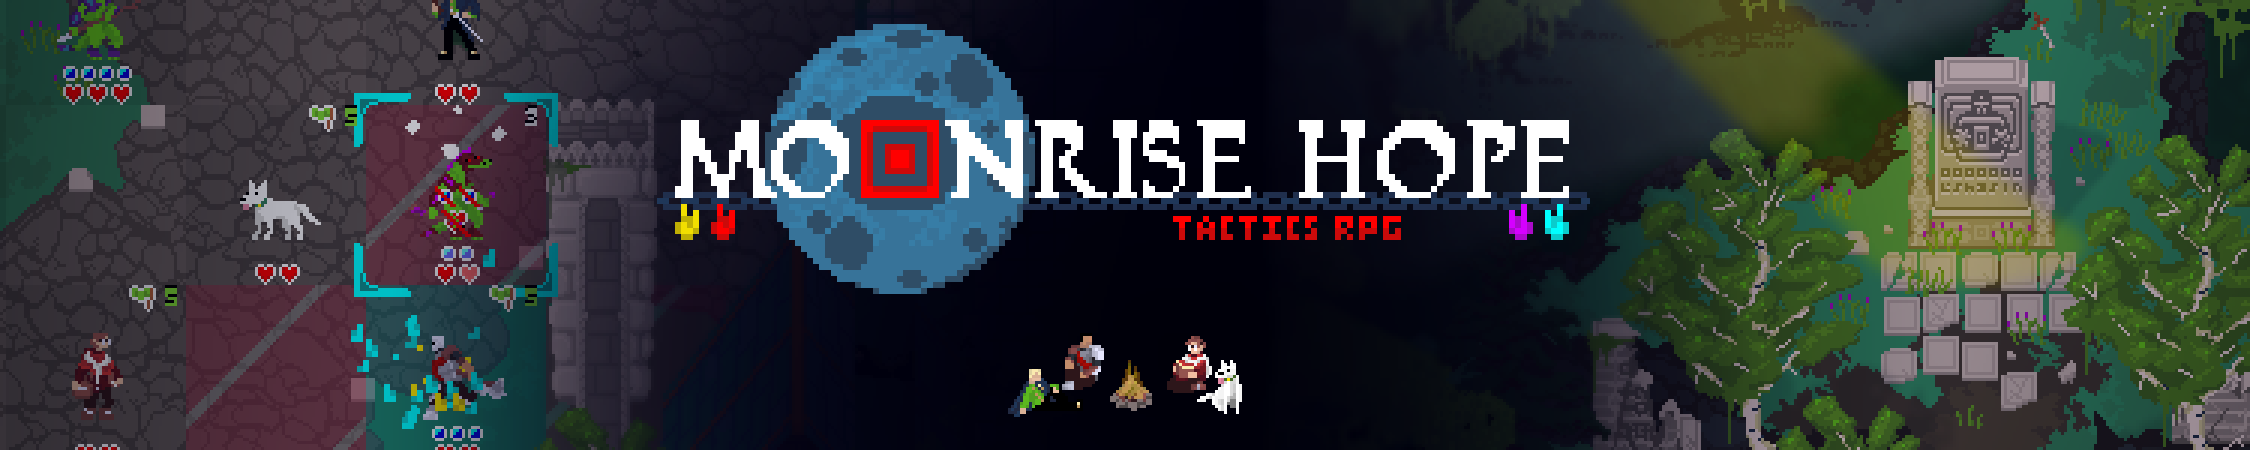 Moonrise Hope : Tactics RPG Alpha Demo